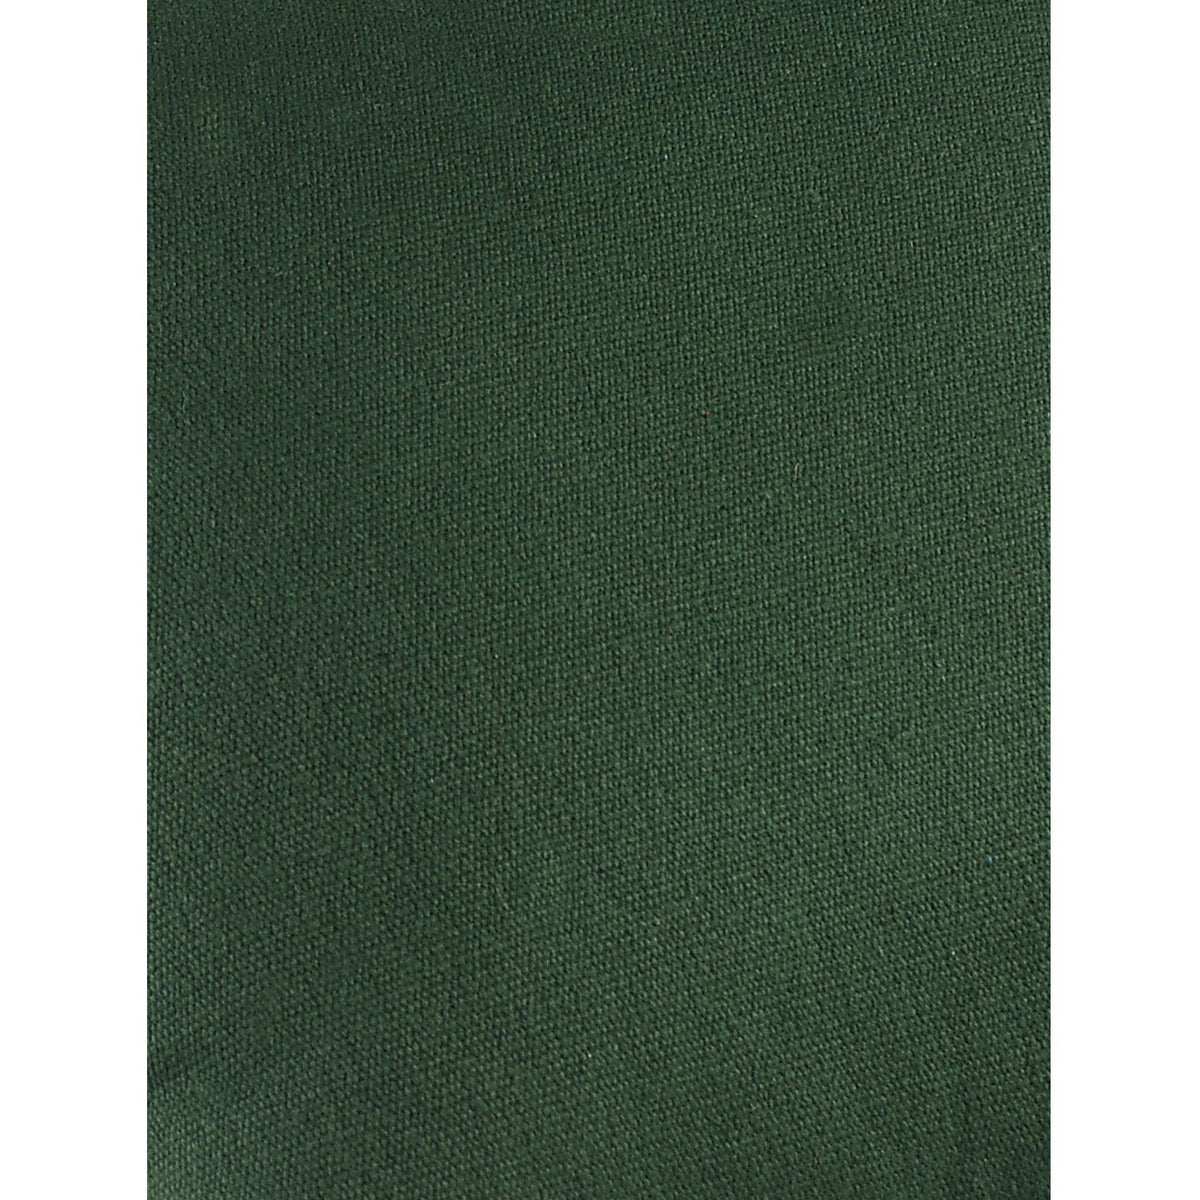 Vibrant Cushion Covers (Set of 2)